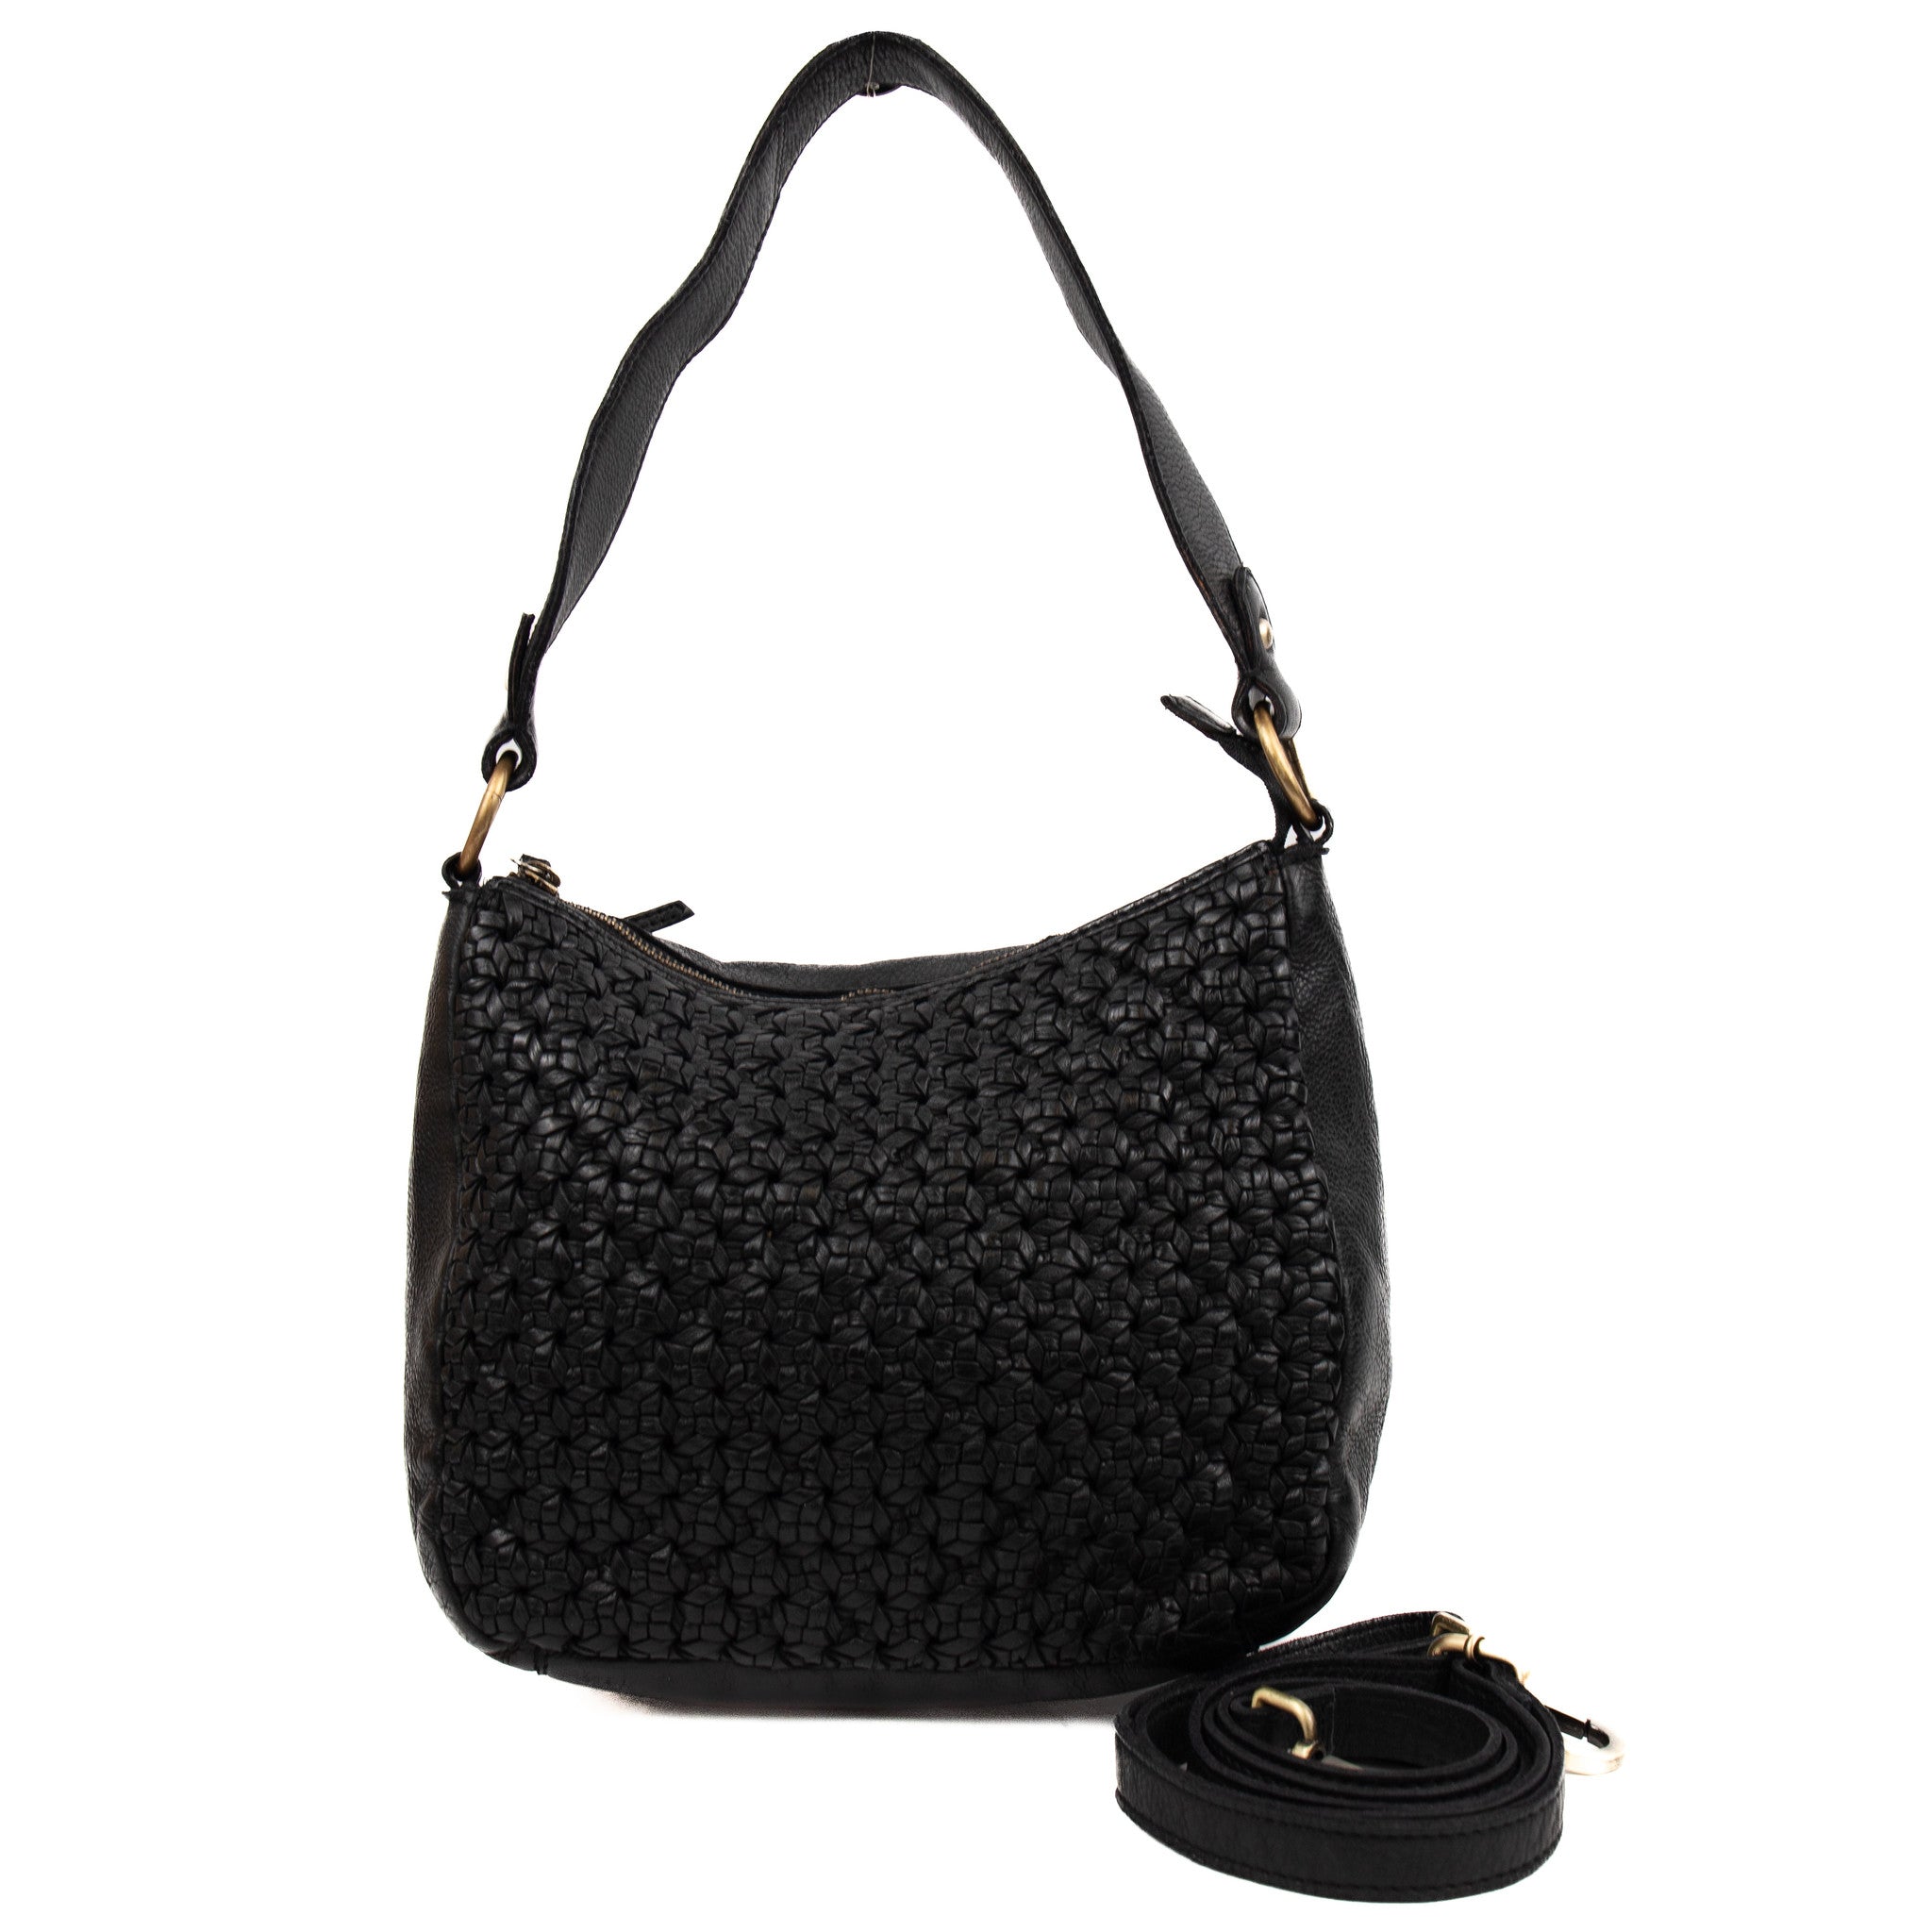 Braided hand/shoulder bag 'Nolita' black - MJ 1521